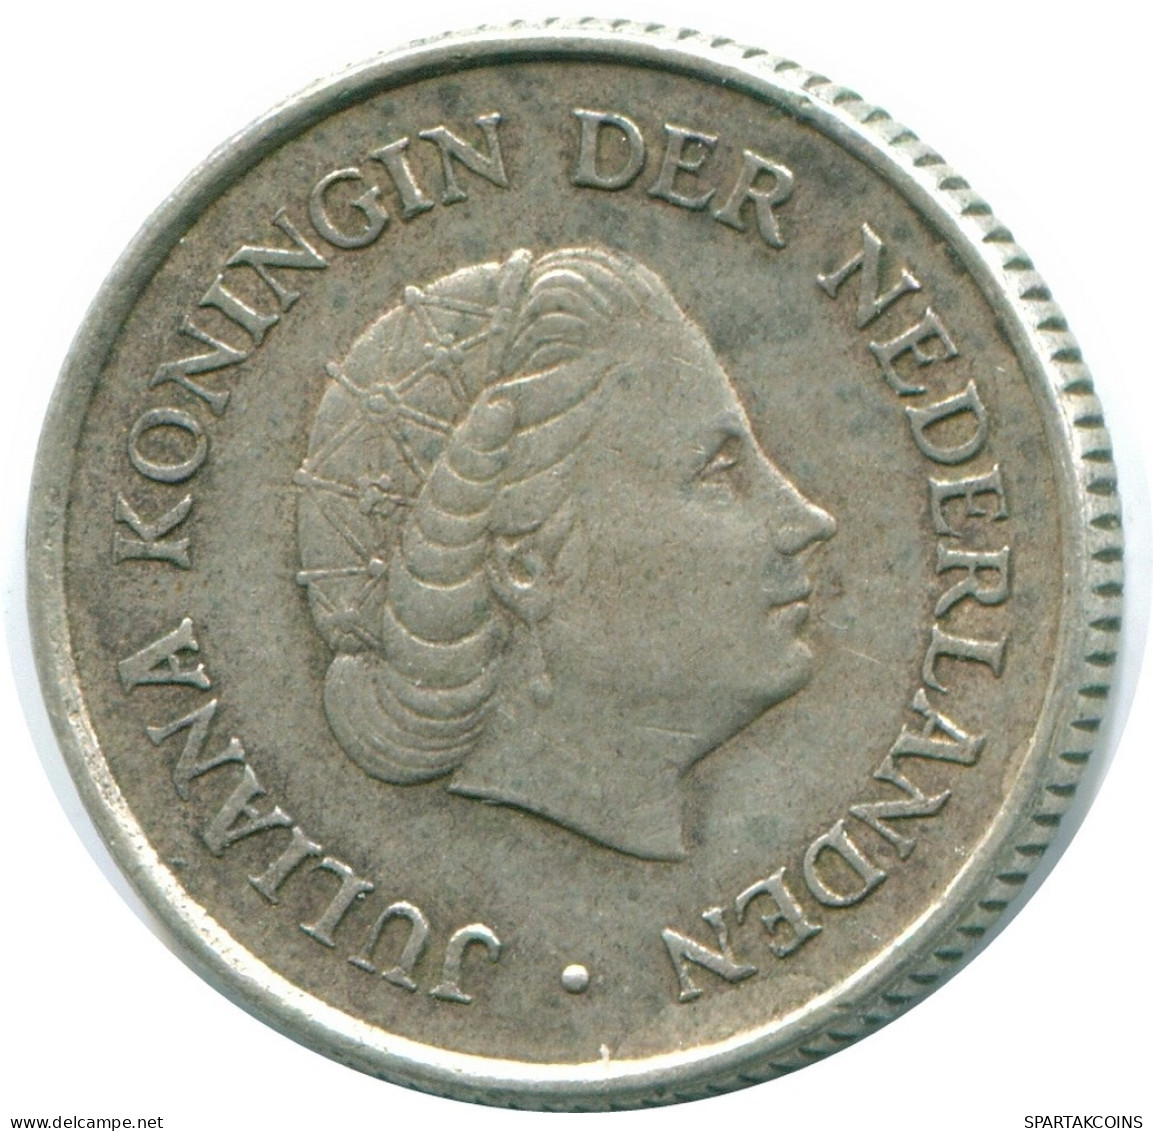 1/4 GULDEN 1967 NETHERLANDS ANTILLES SILVER Colonial Coin #NL11561.4.U.A - Niederländische Antillen